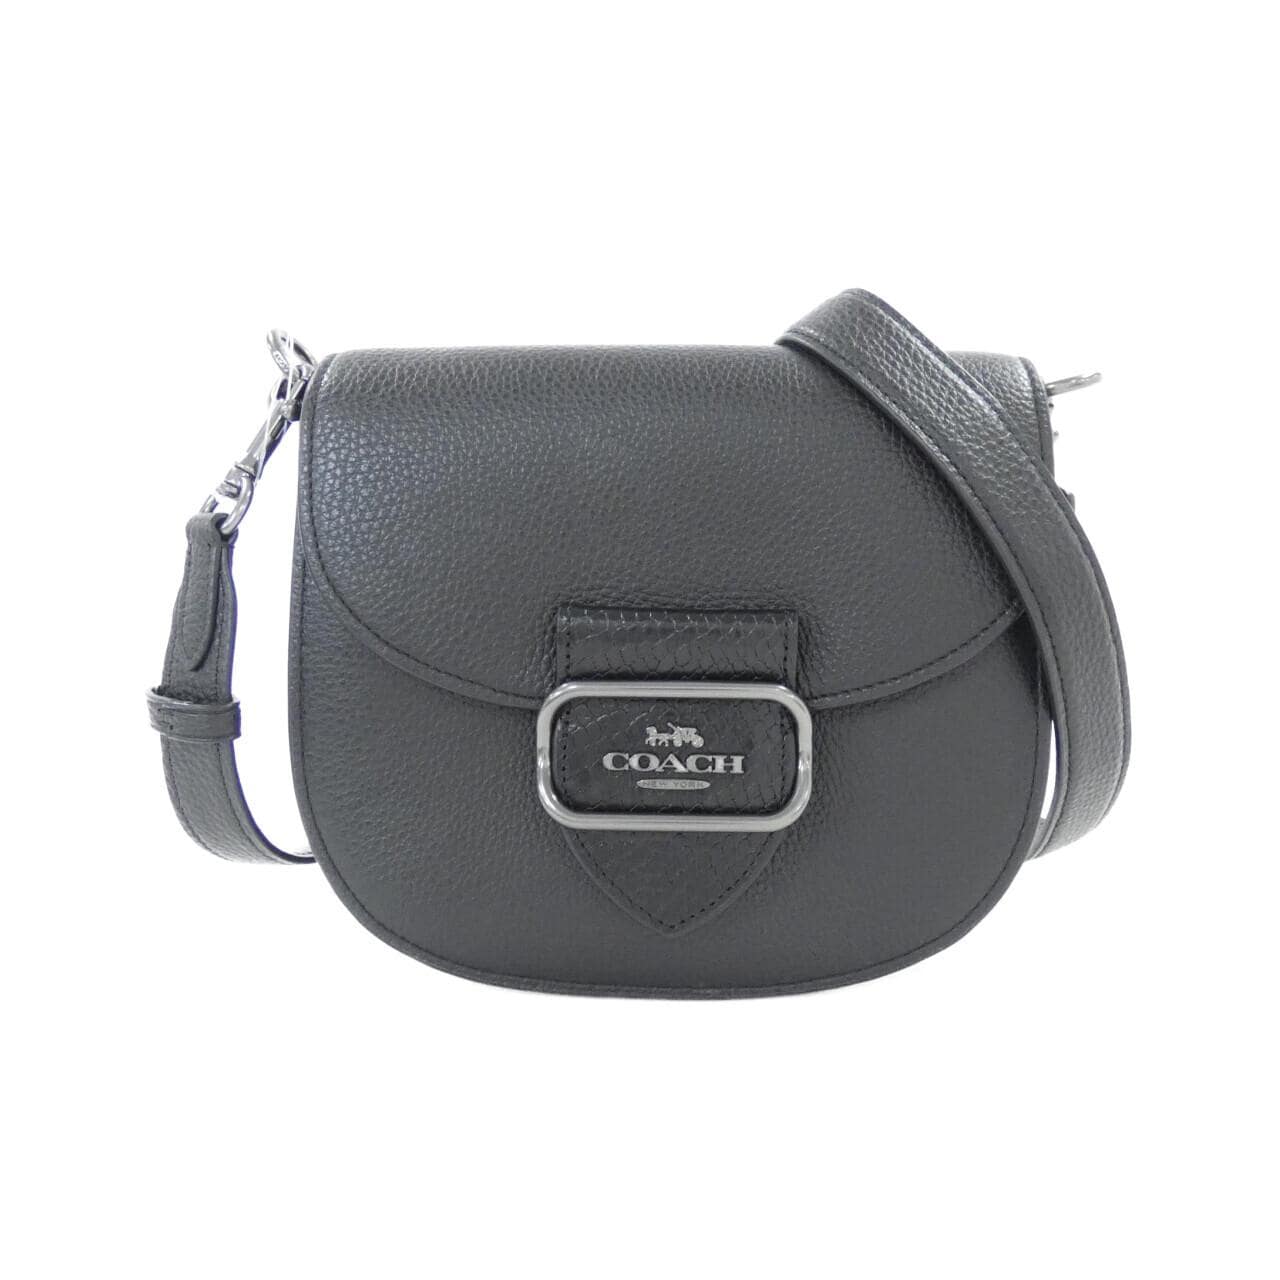 [BRAND NEW] Coach CG470 Shoulder Bag